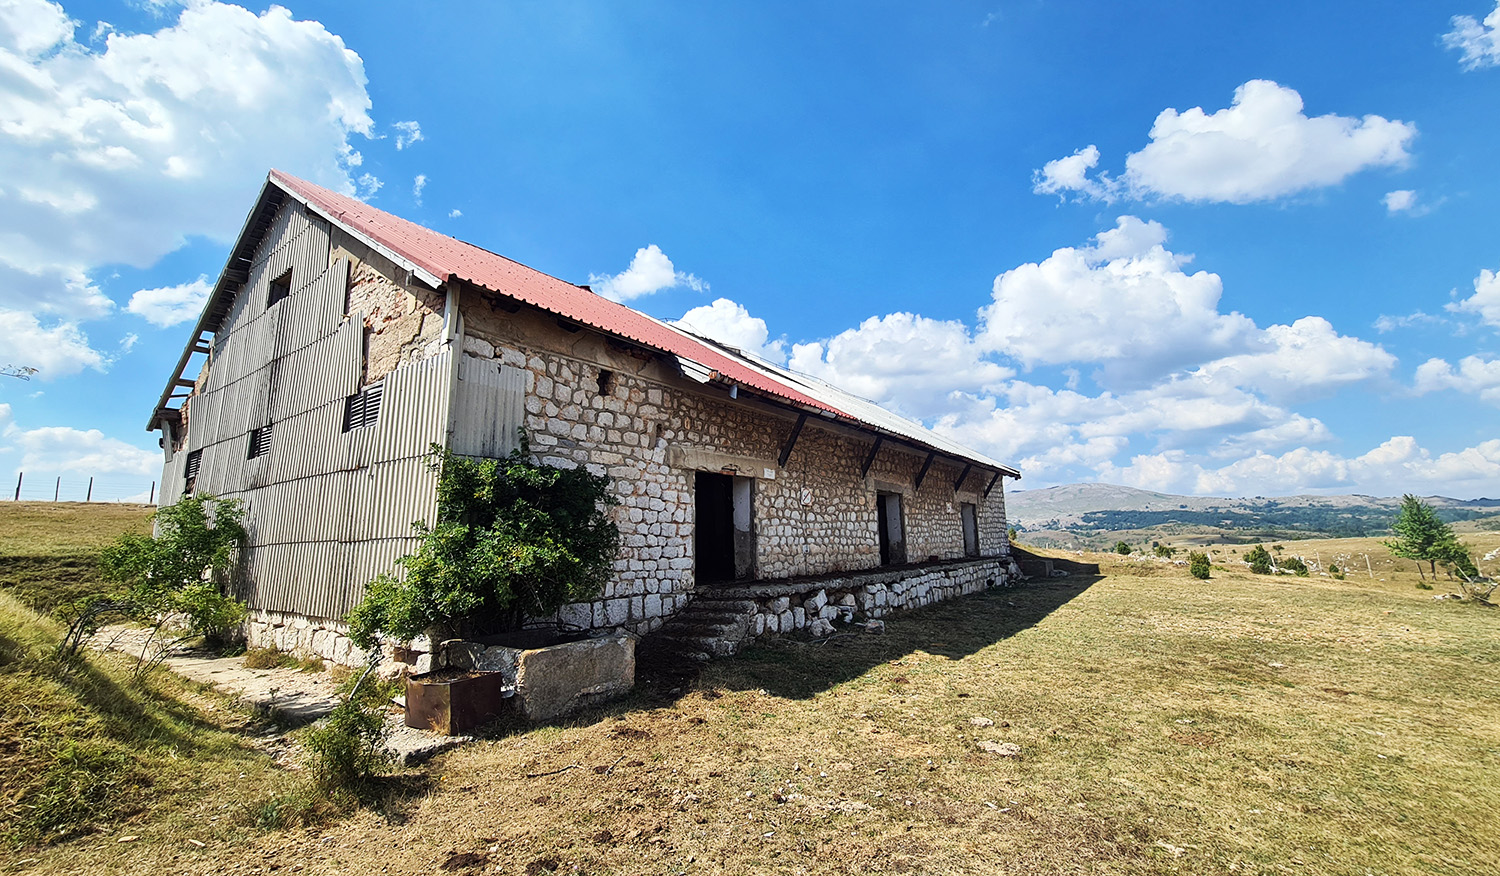 Barutni Magazin Concentration Camp at Kalinovik - Bosnia and Herzegovina